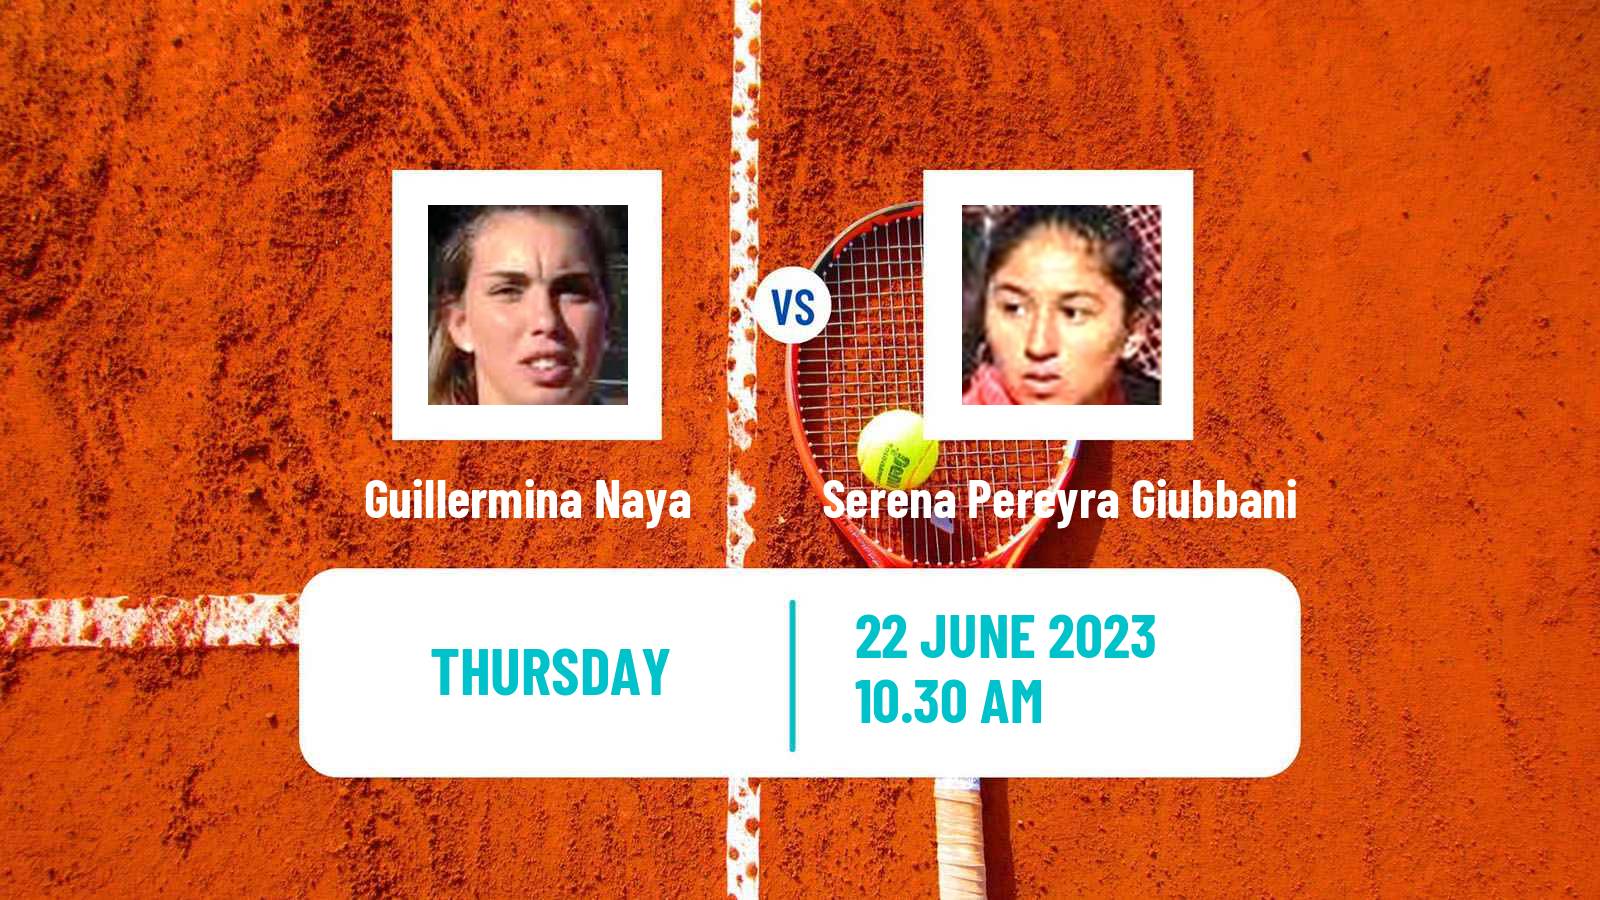 Tennis ITF W15 Buenos Aires Women Guillermina Naya - Serena Pereyra Giubbani